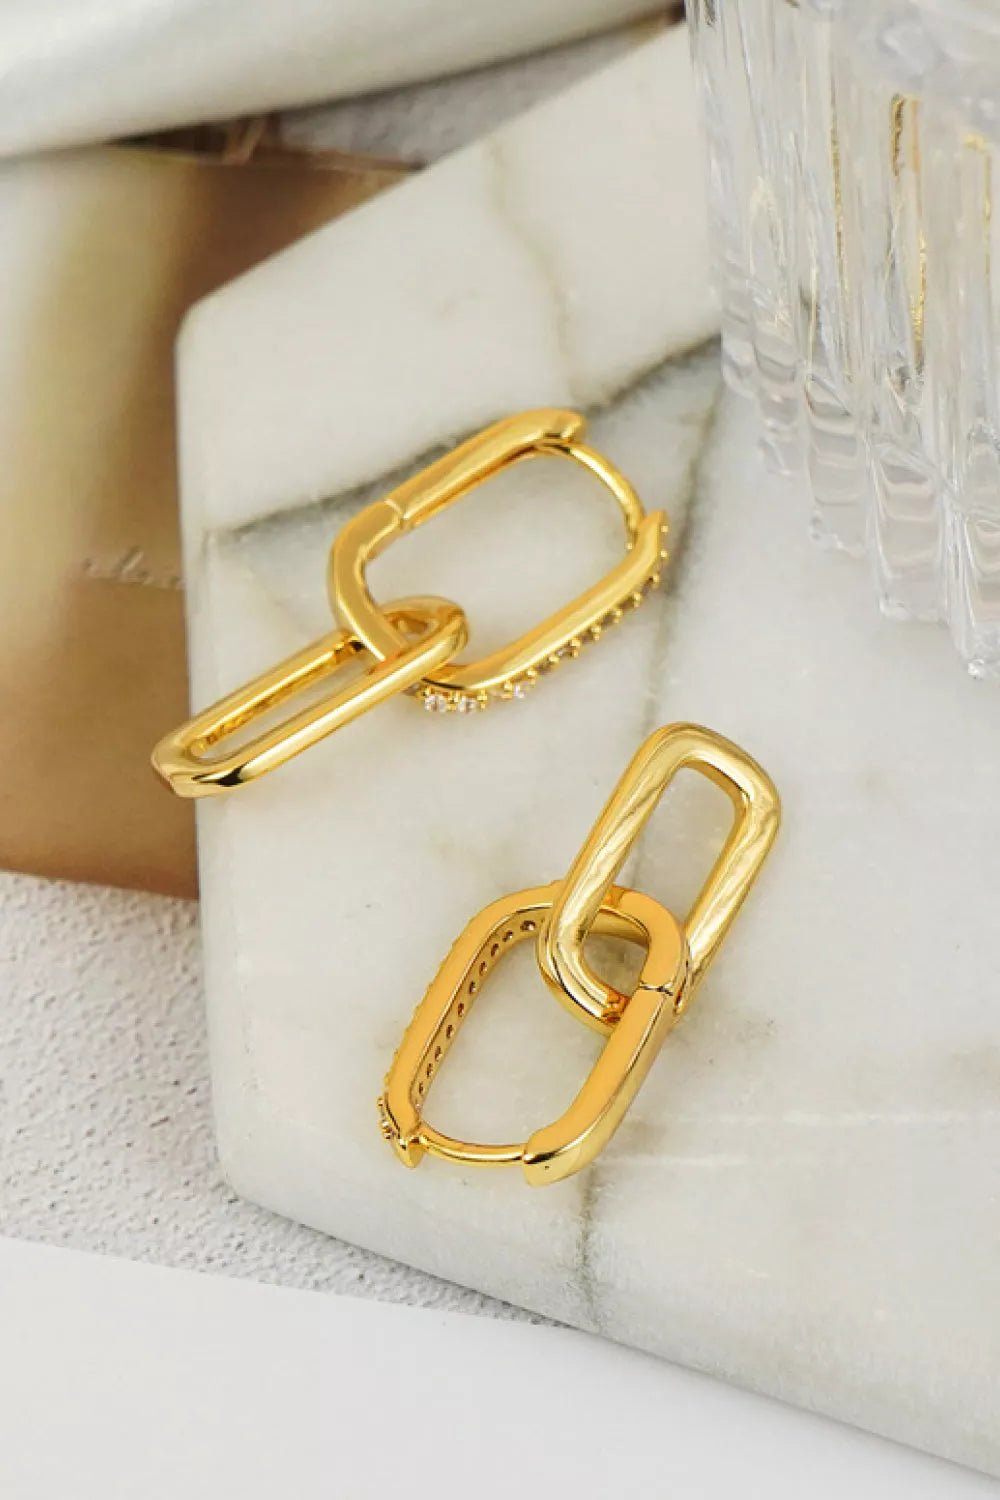 Cubic Zirconia Link Earrings - London's Closet Boutique